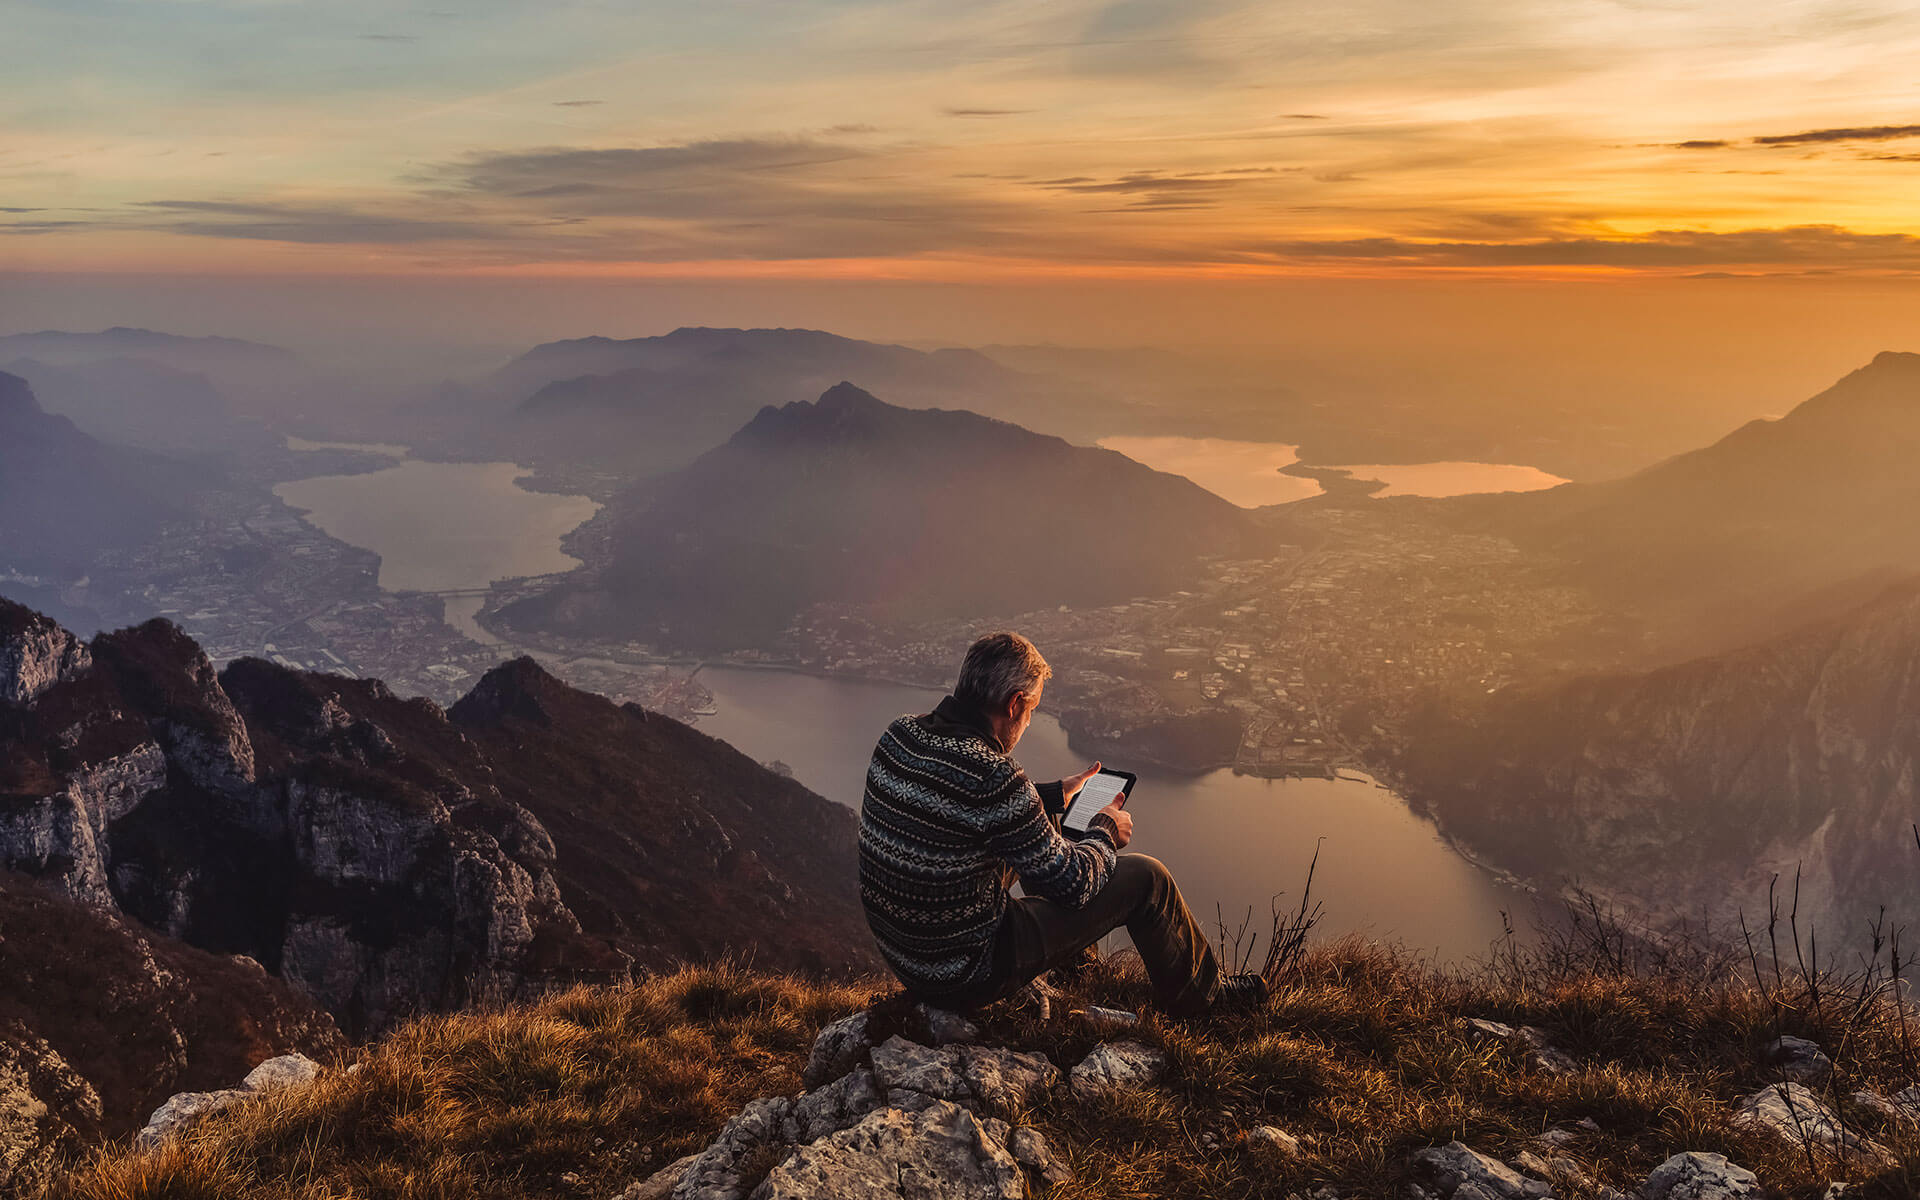 a man reading atop a mountain at sunset